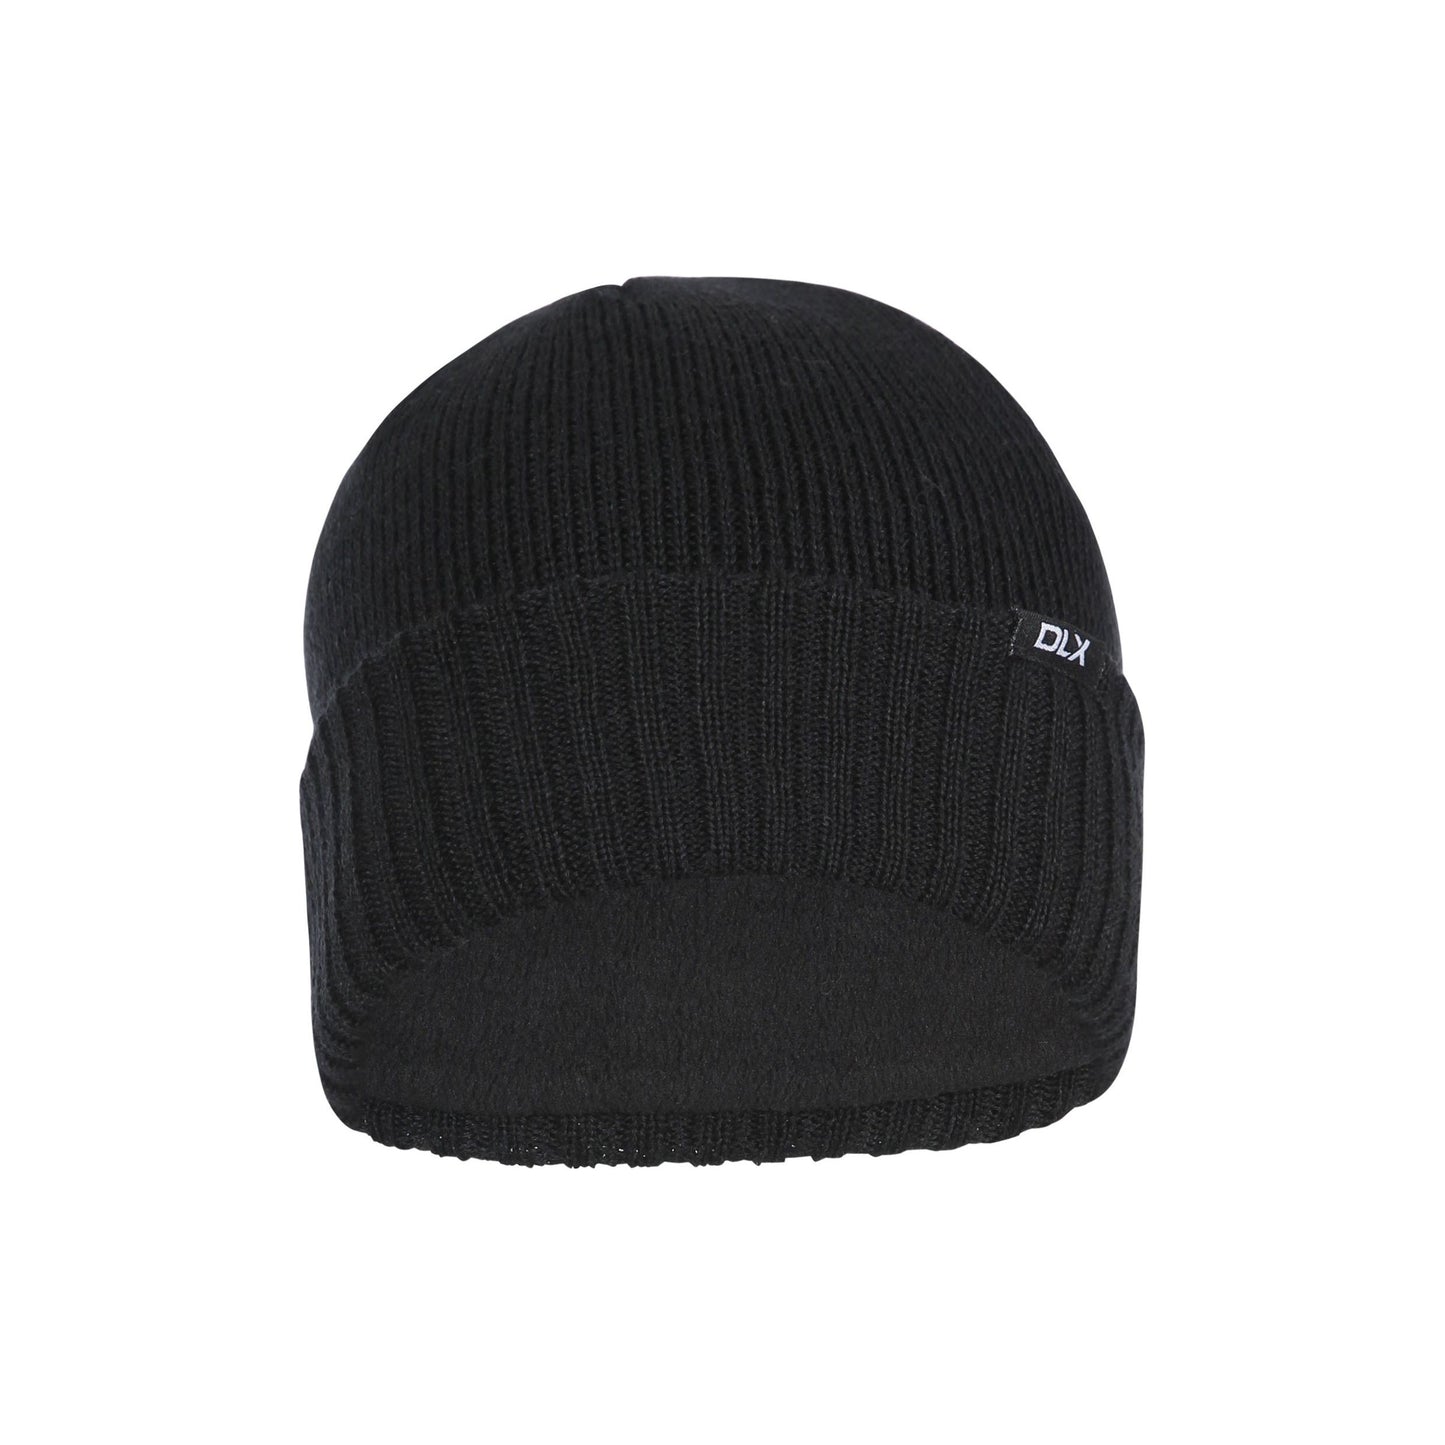 Ronan Unisex Adults DLX Knitted Wool Beanie Hat in Black